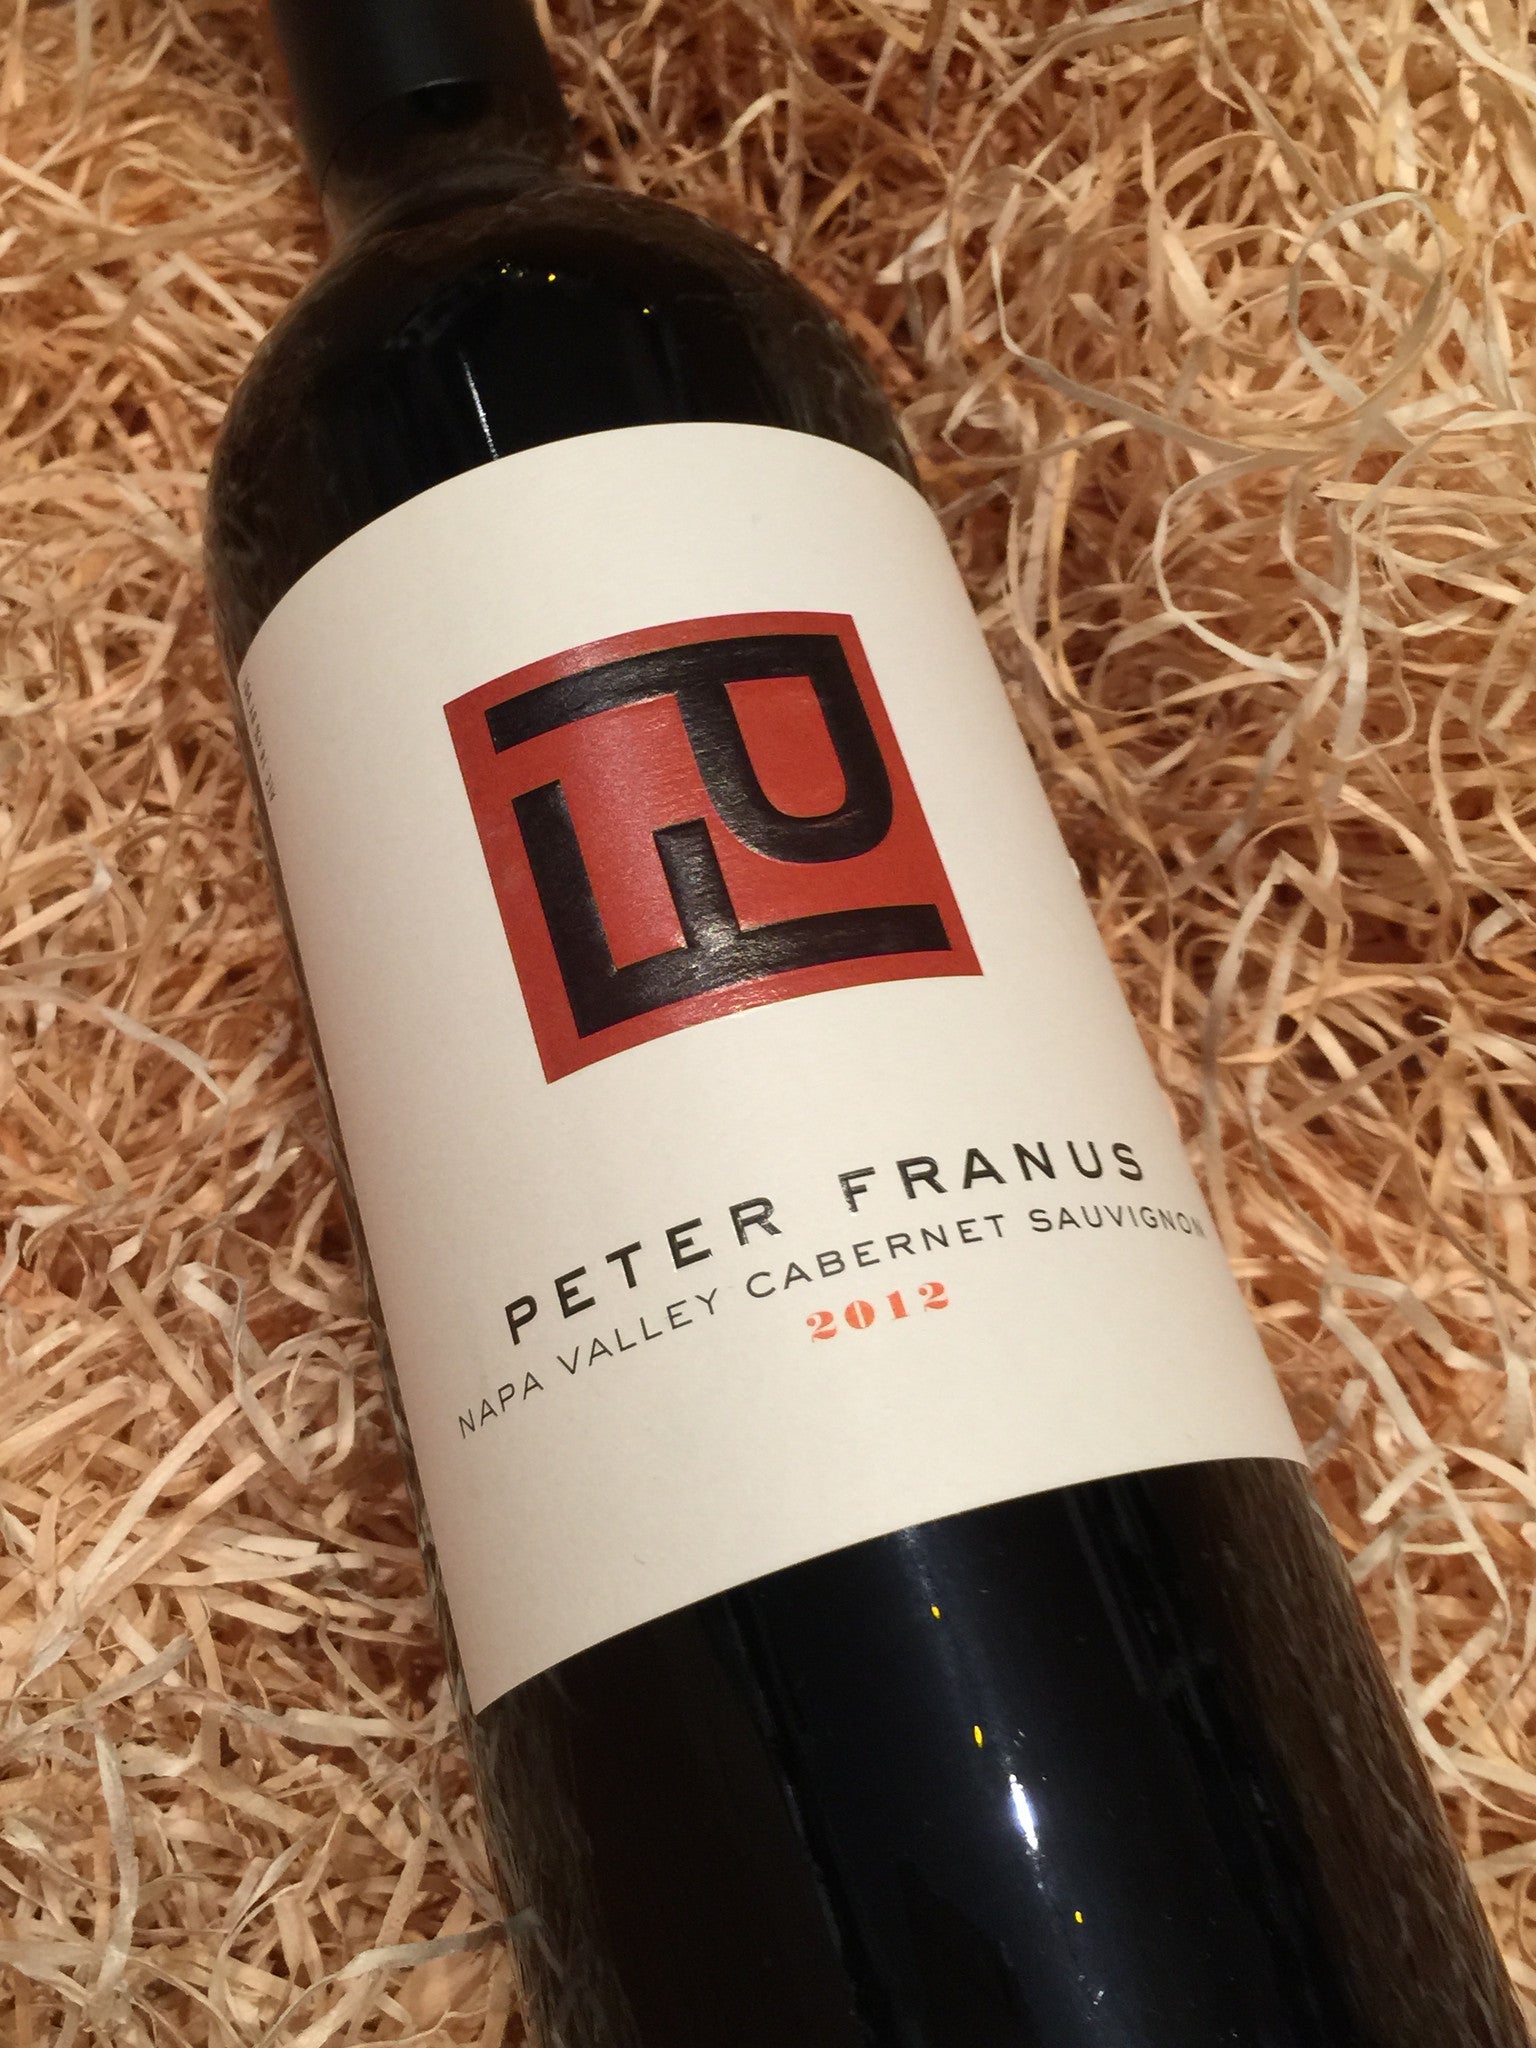 Peter Franus Wine Company